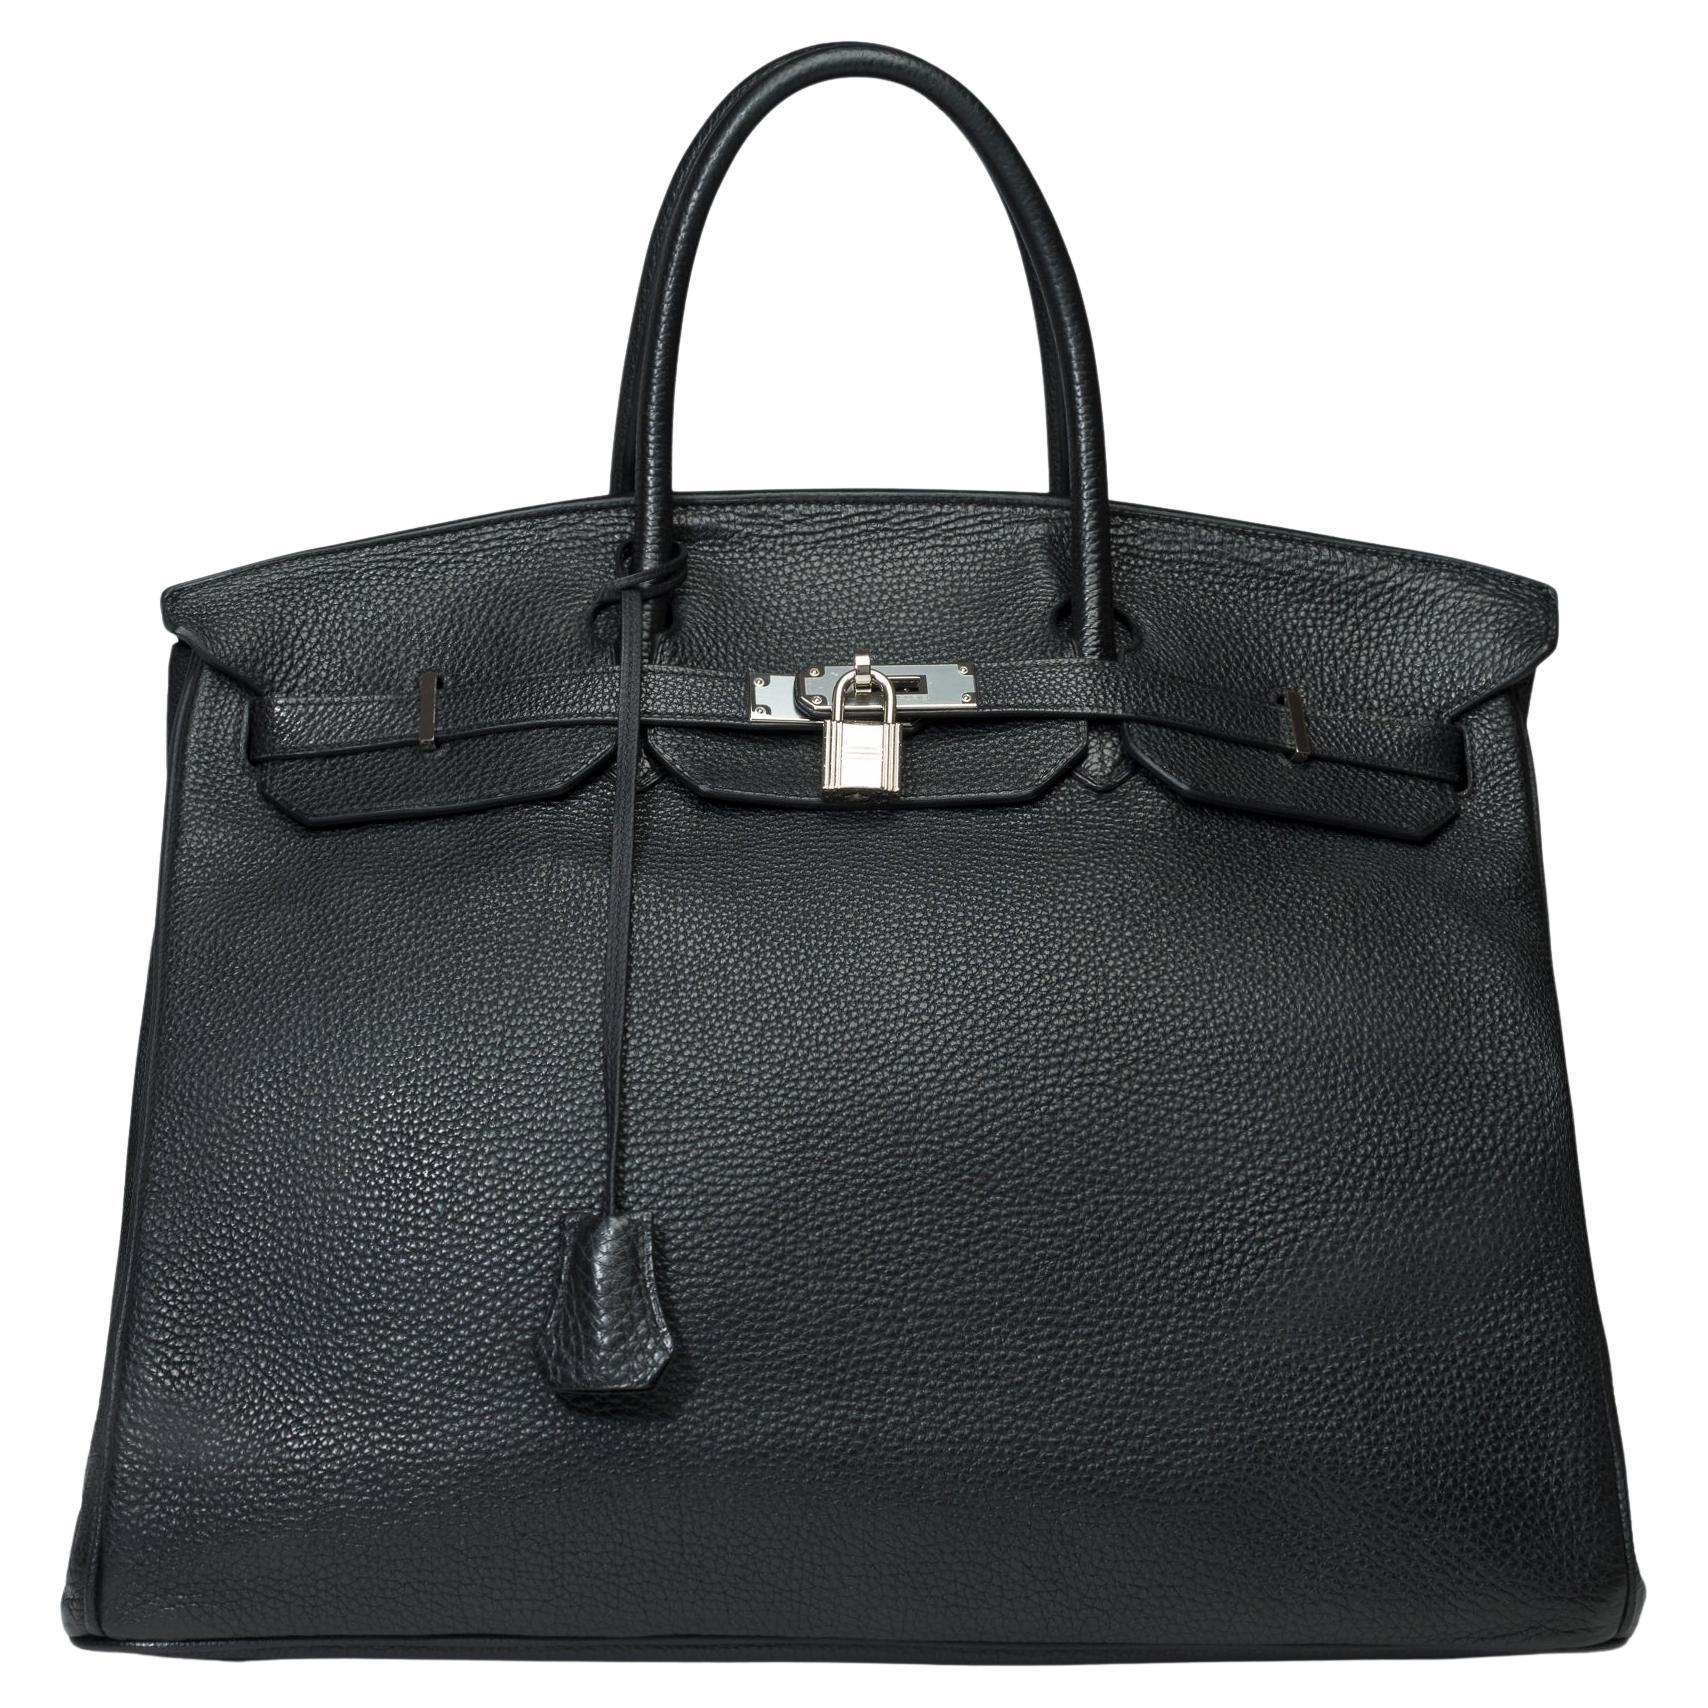 Very Classy Hermes Birkin 40 handbag in Black Togo Calf leather, SHW